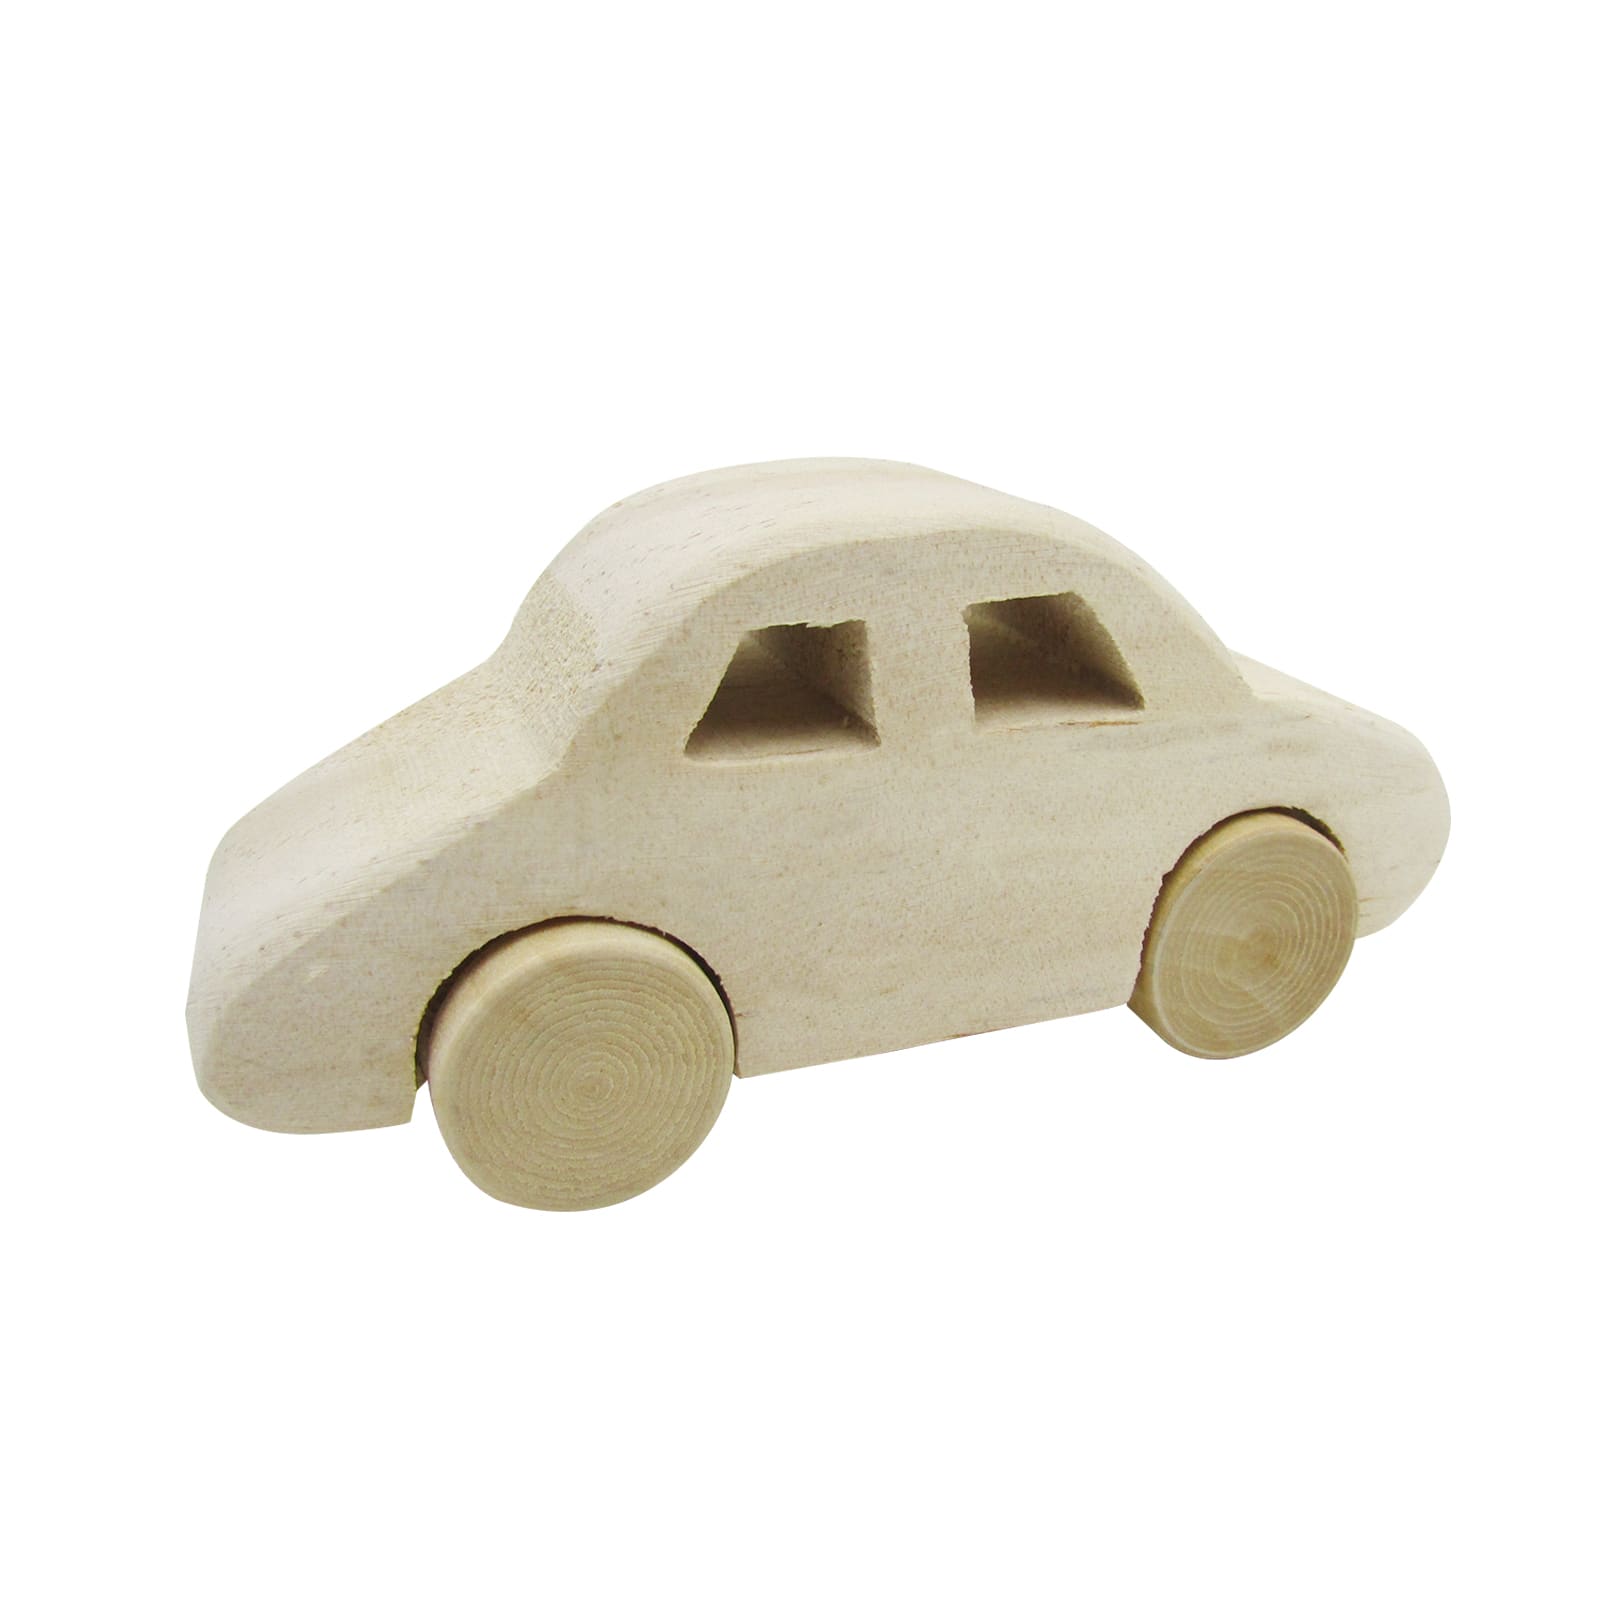 wooden car kits michaels